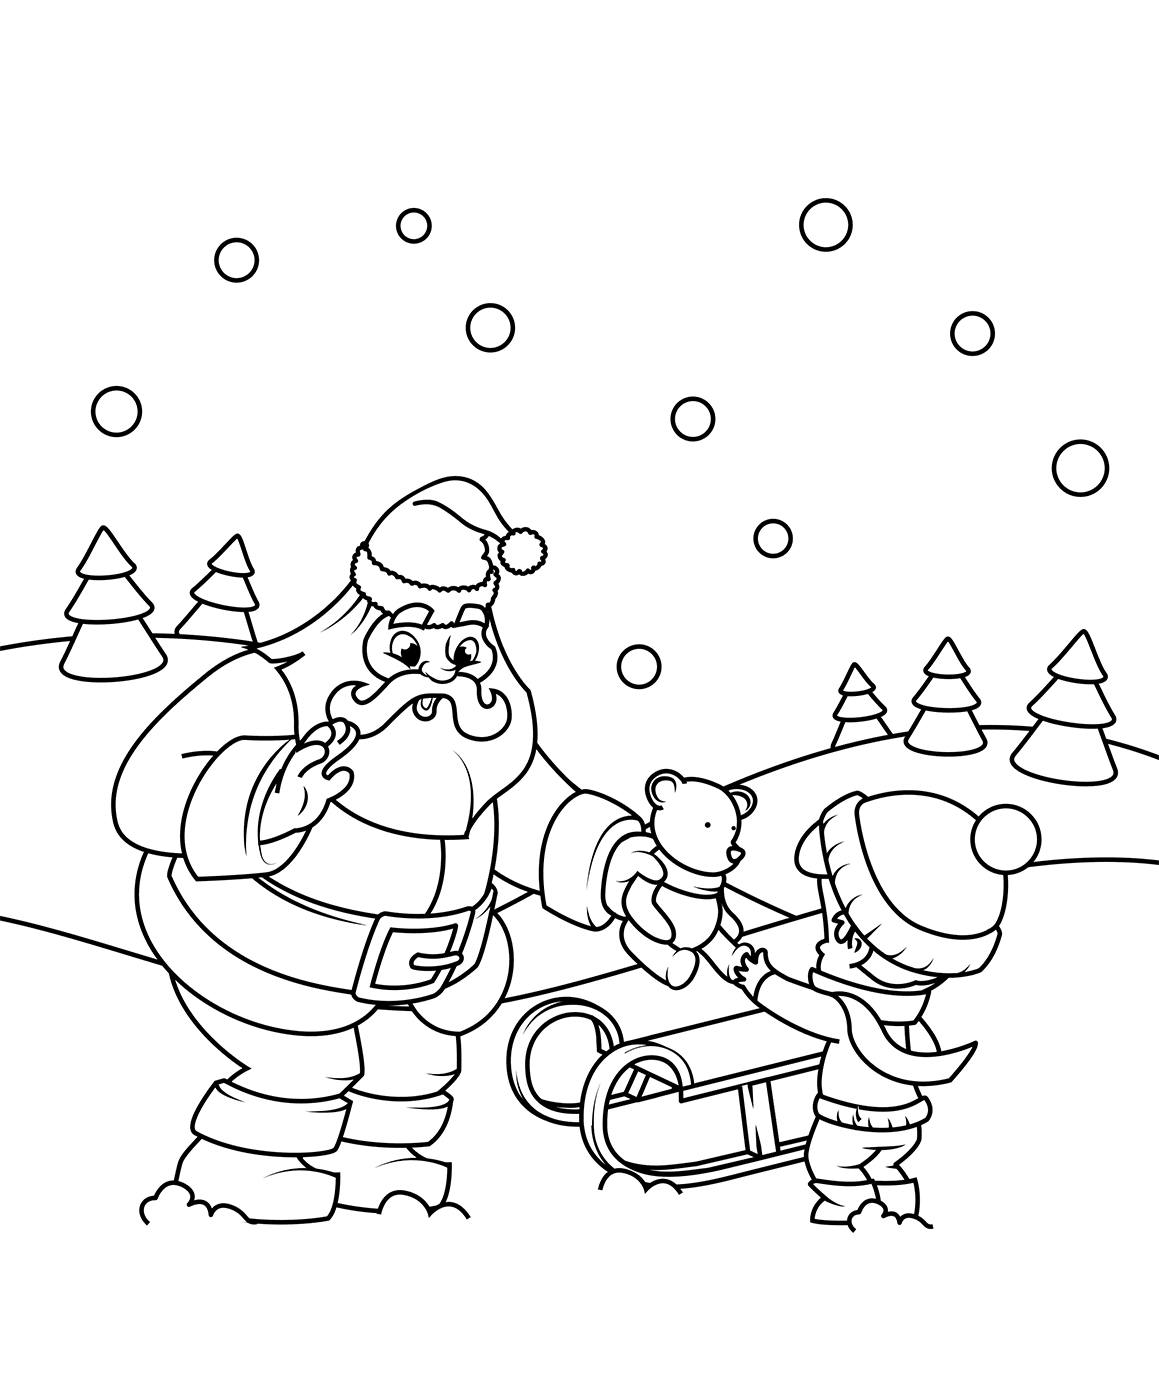 Santa Gives A Gift To A Boy Christmas Coloring Page